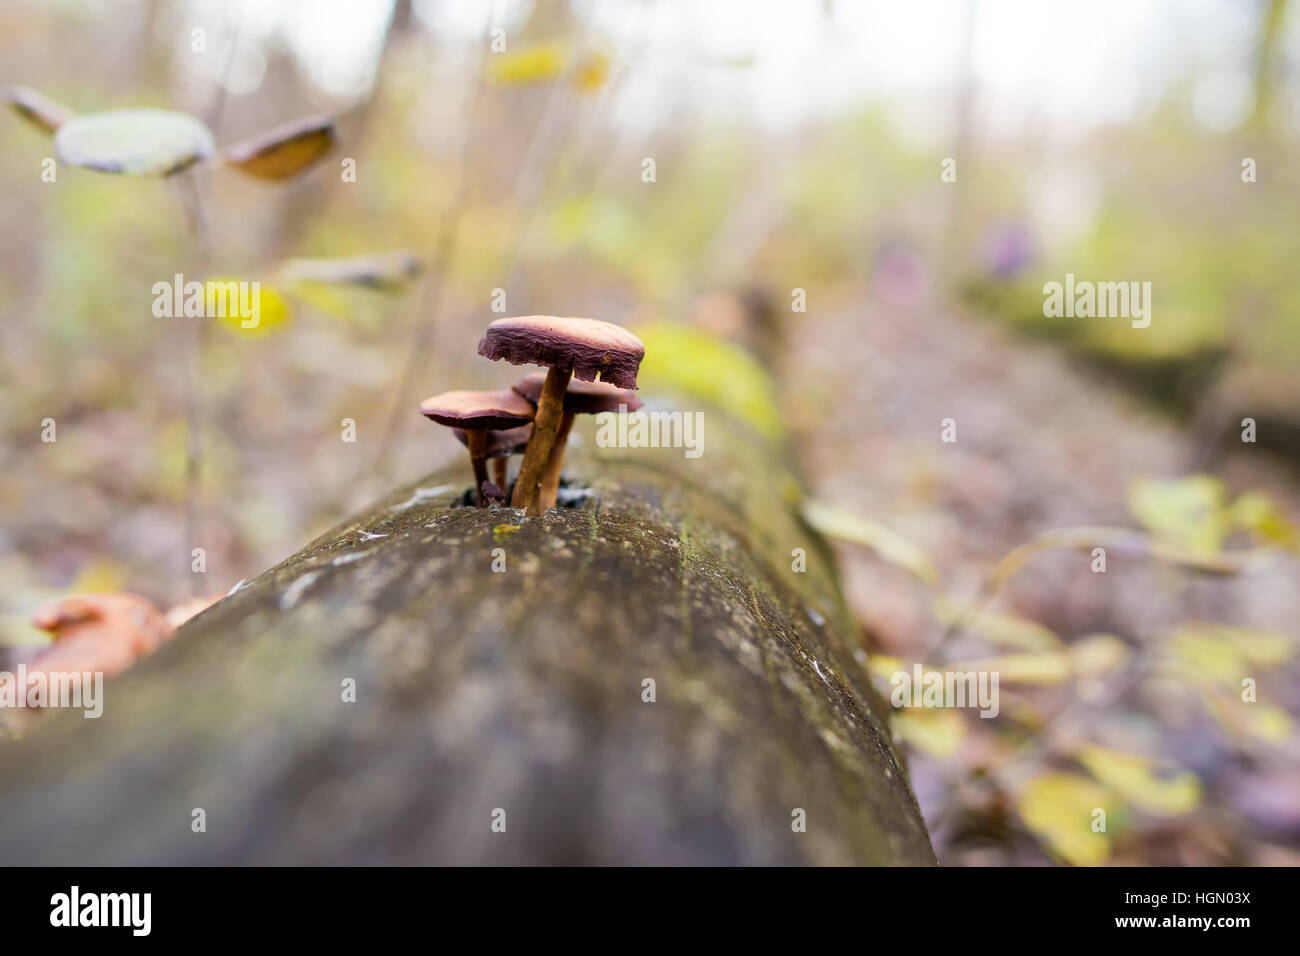 Mushroom grown on tree in natural light Stock Photo